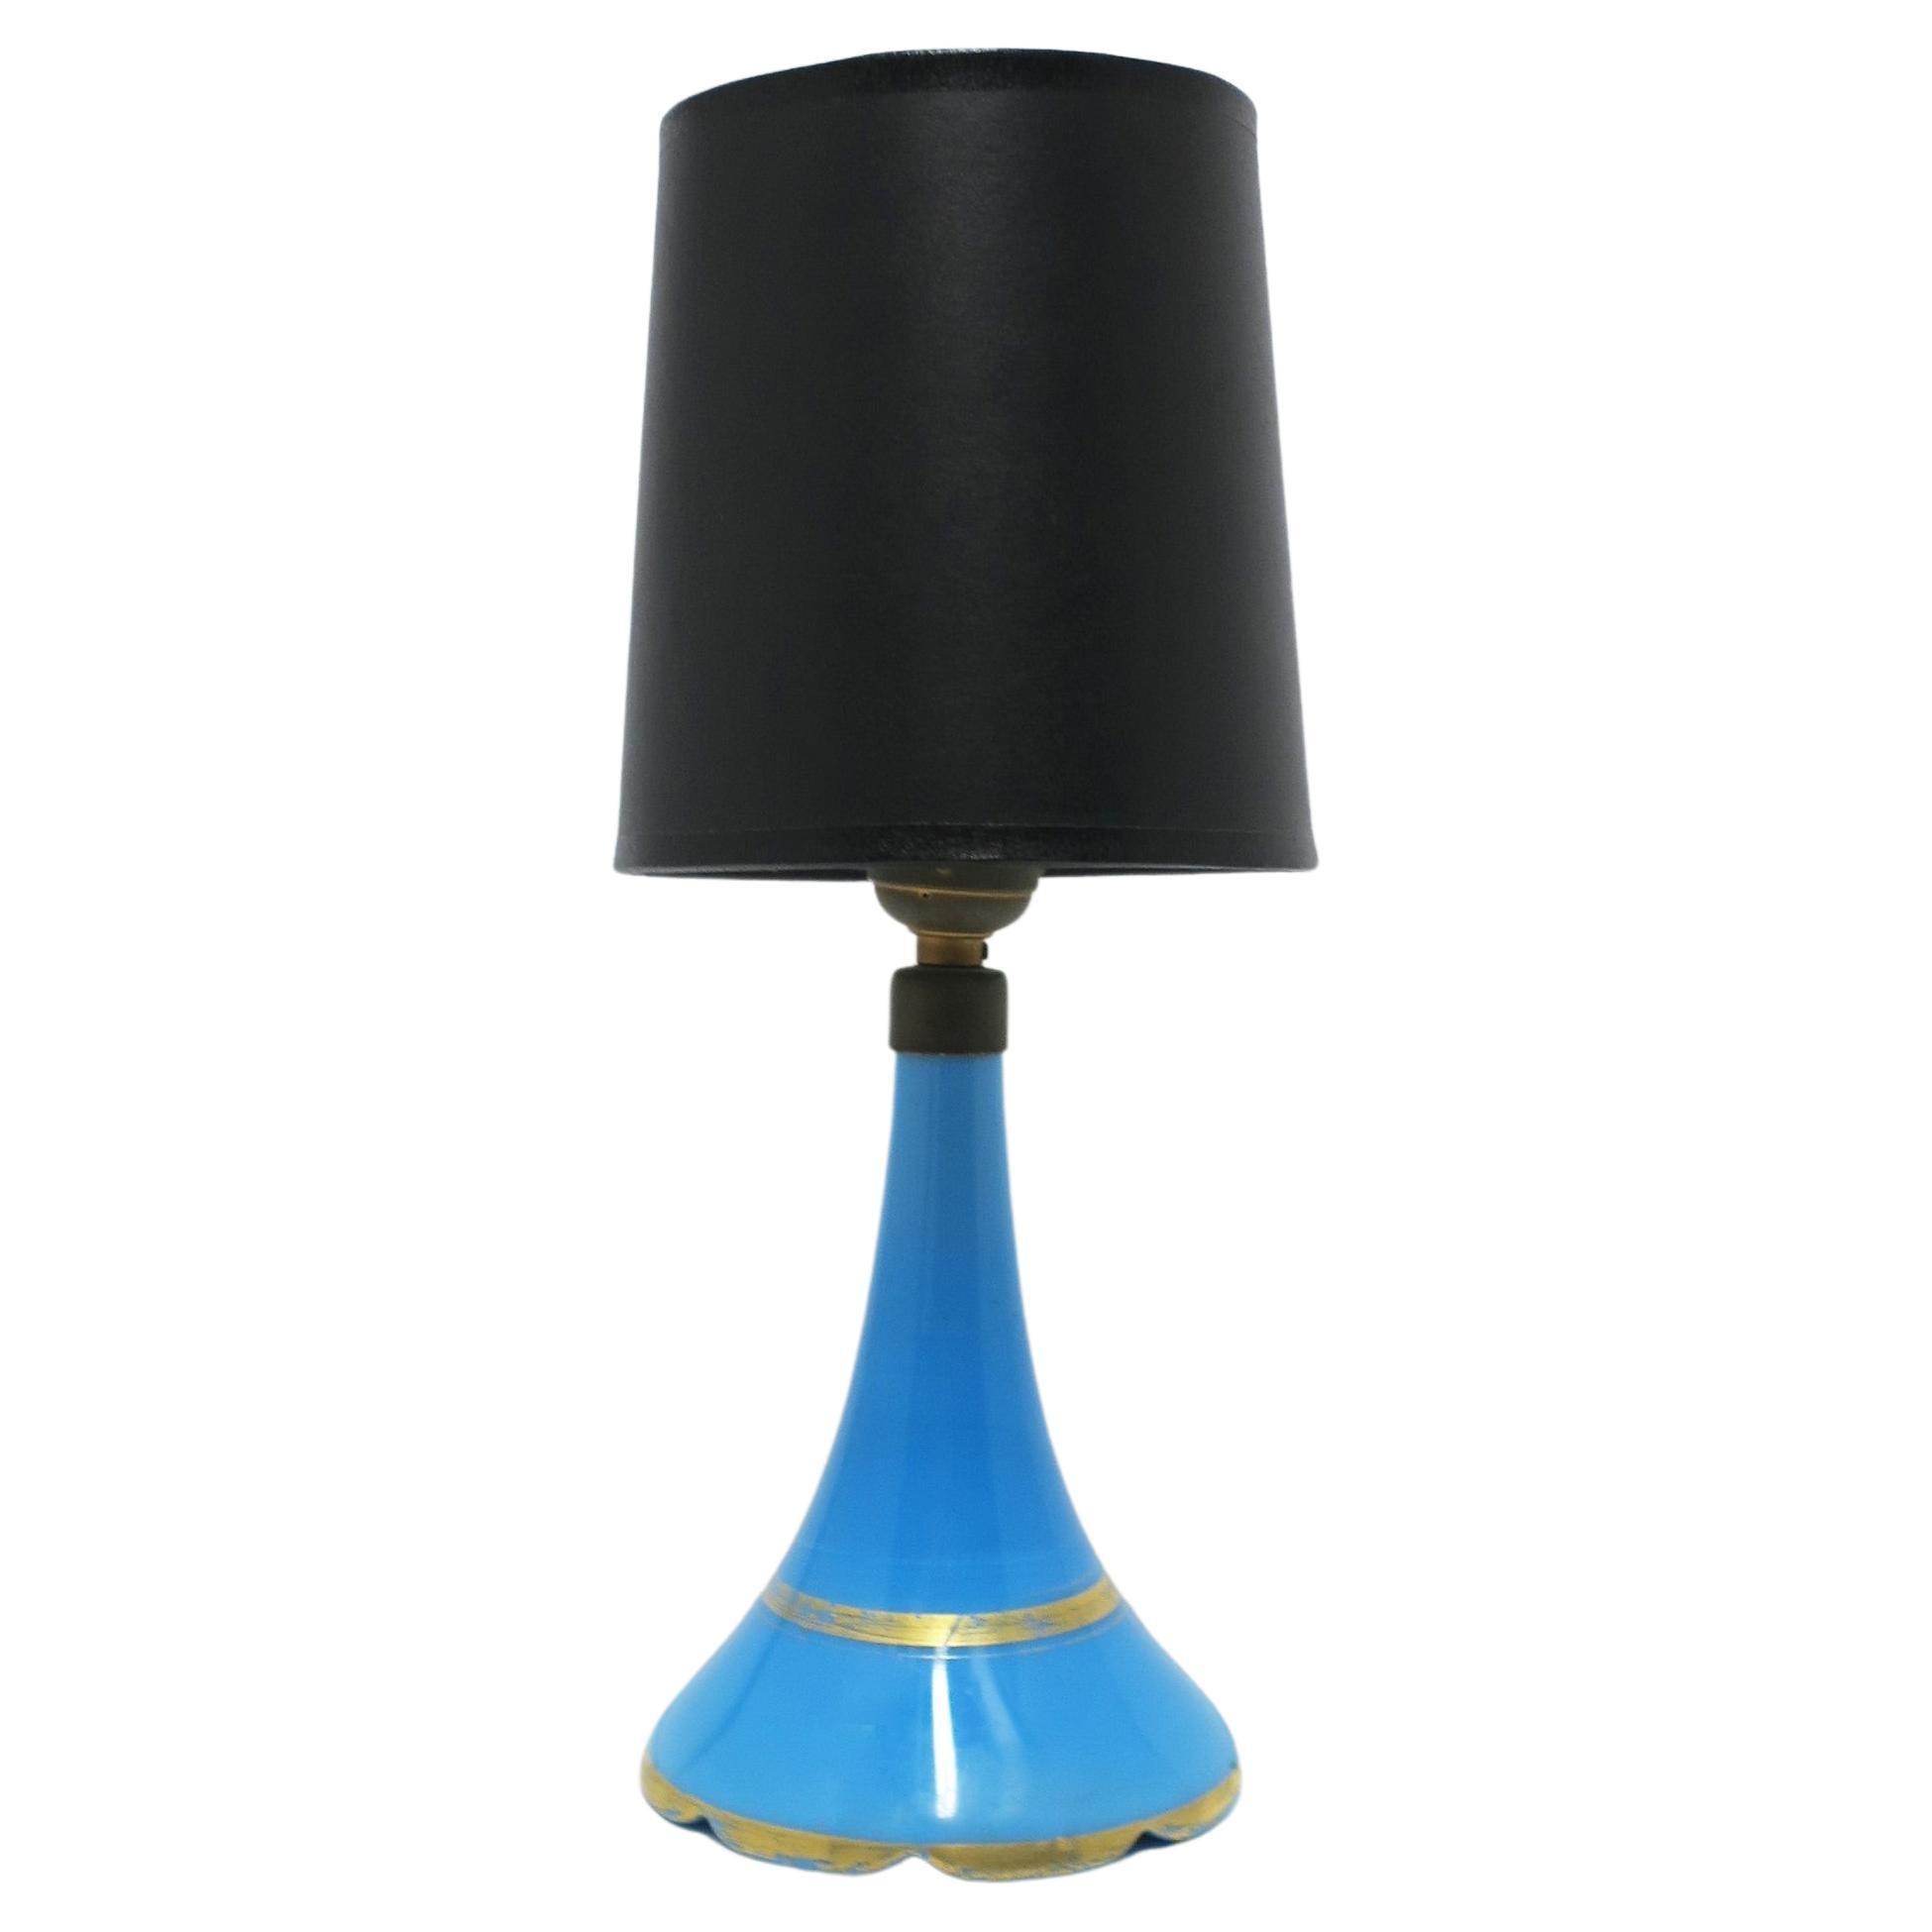 Lampe de bureau italienne en verre opalin bleu avec bord festonné en vente